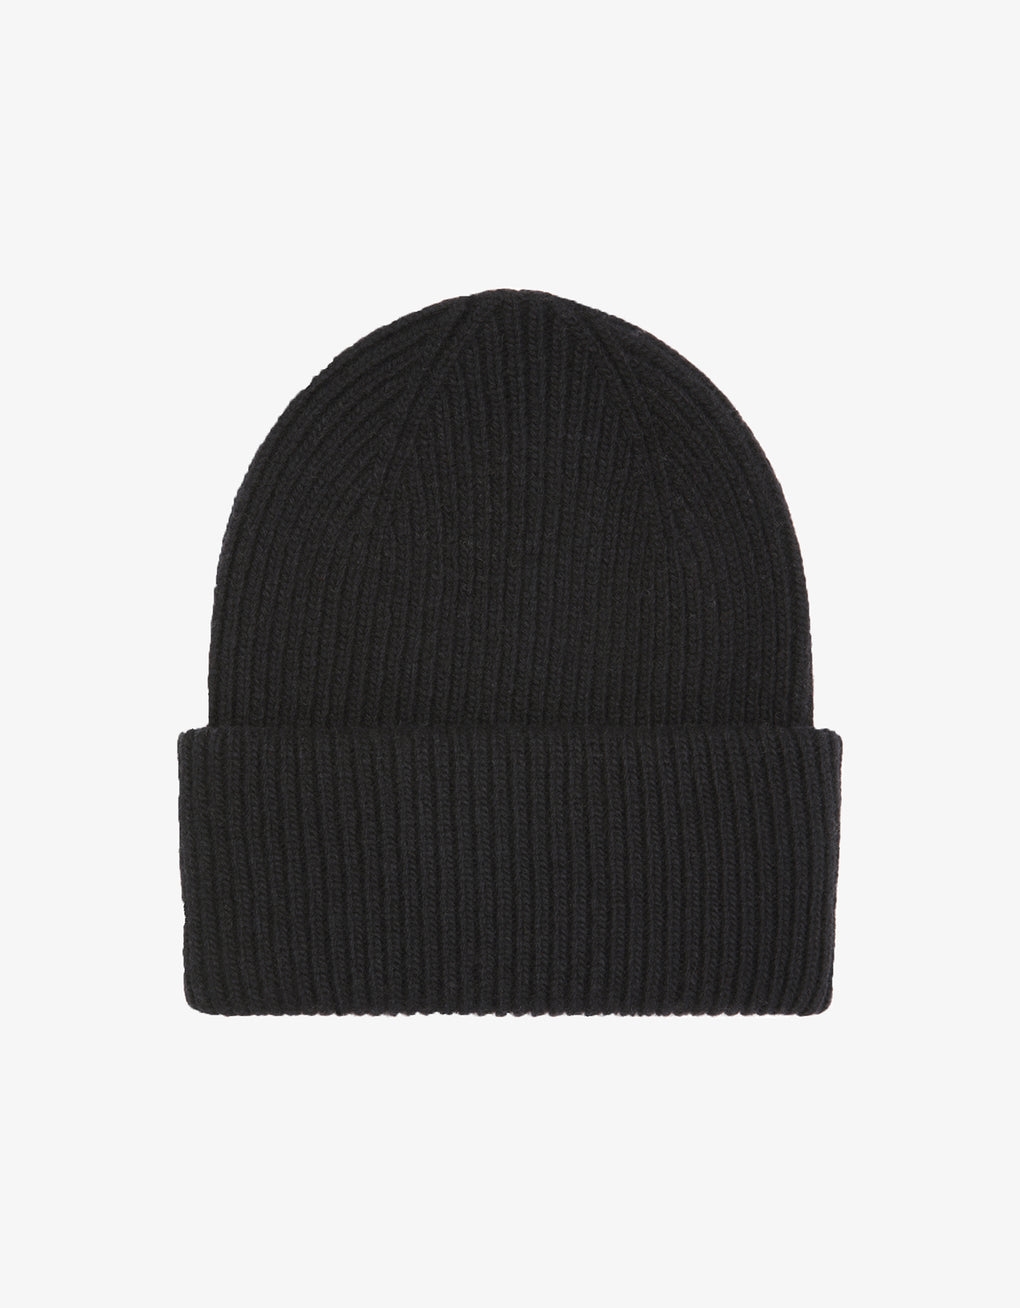 Merino wool hat - black